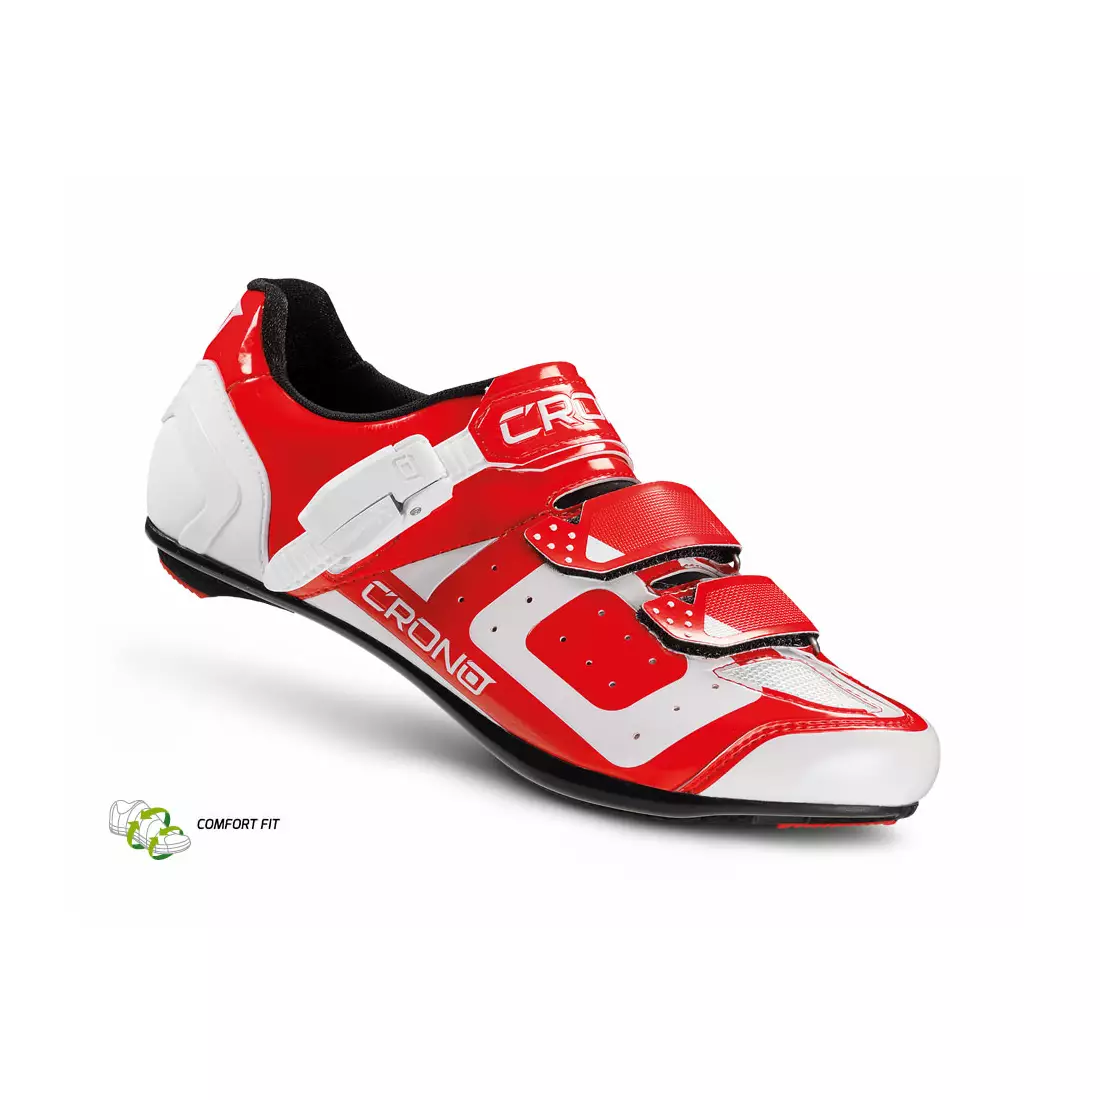 CRONO CR3 nylon - road cycling shoes, red